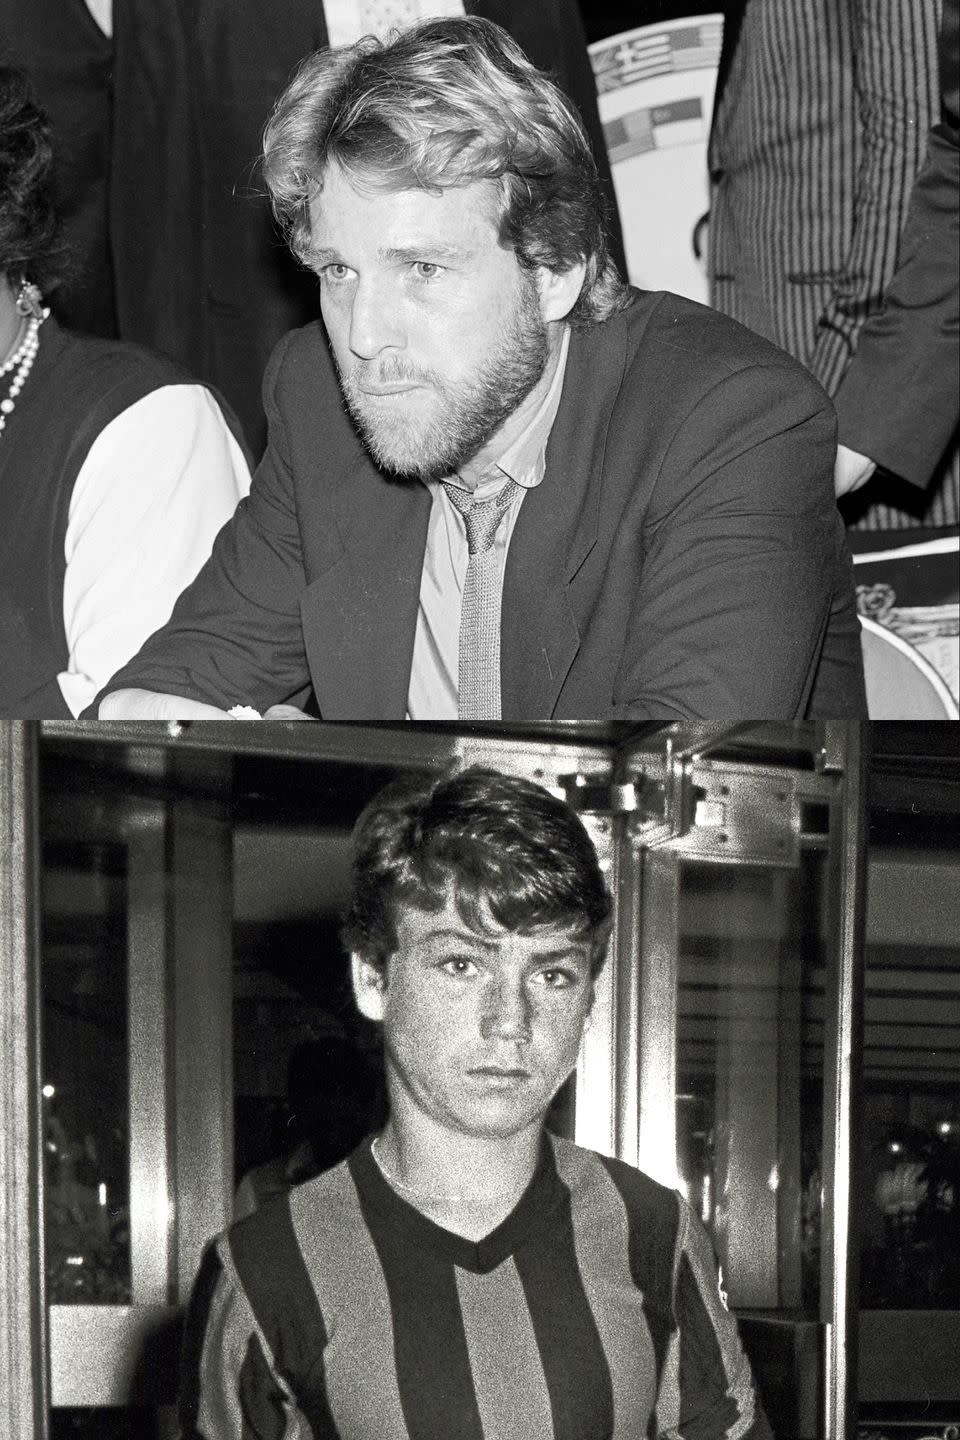 1983: Ryan O’Neal vs. Griffin O’Neal